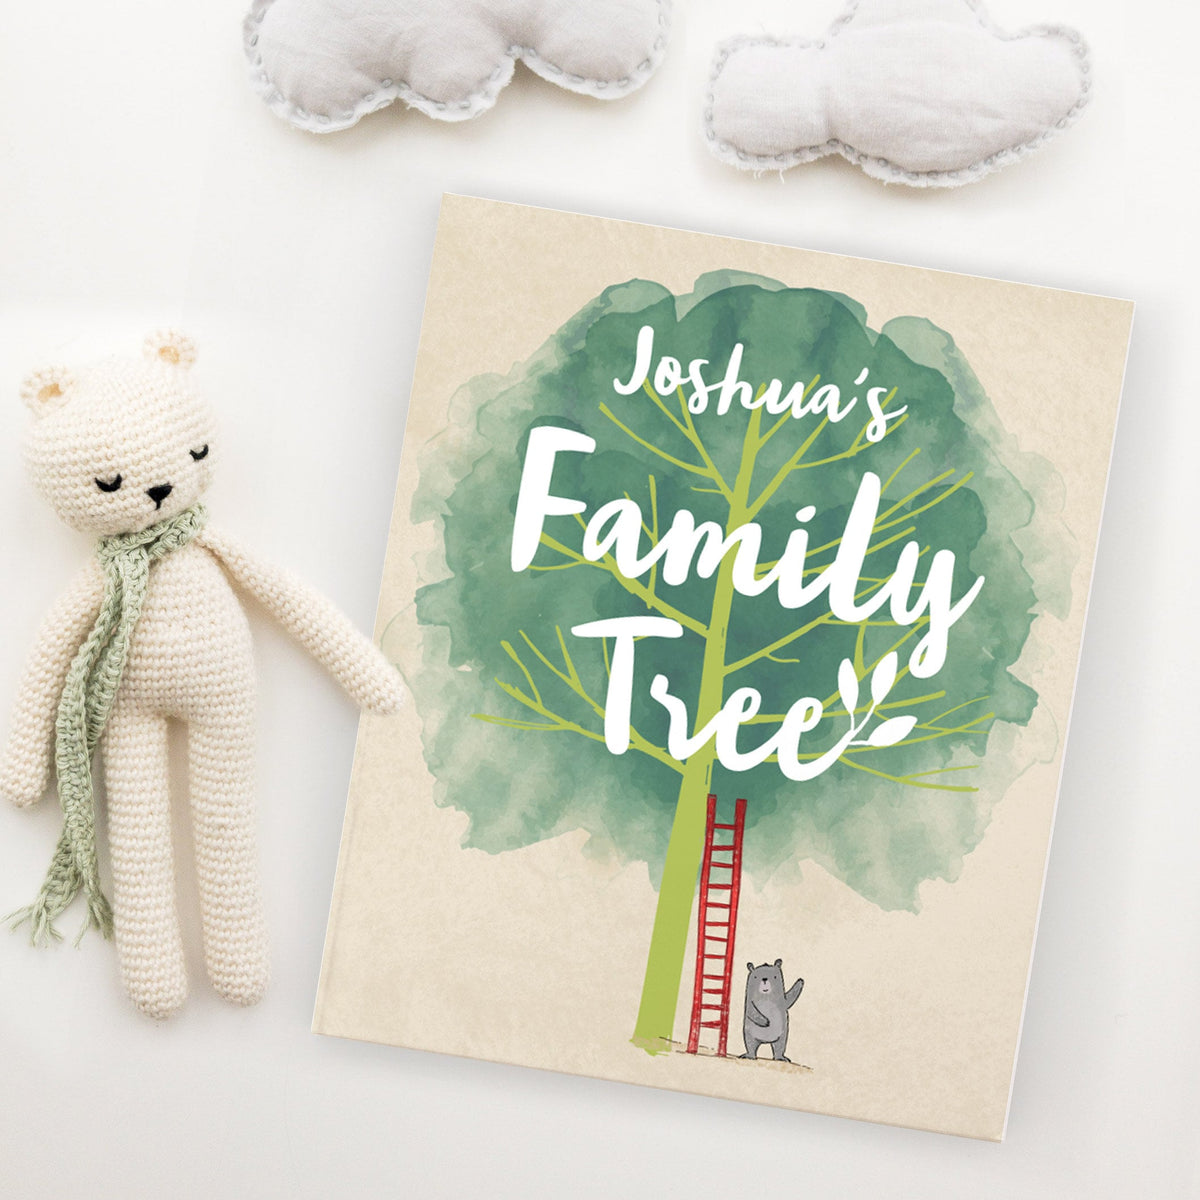 Personalised family tree keepsake book for baby - plant a tree, for a new baby, birthday, grandchild, niece, nephew, godchild, baptism gift